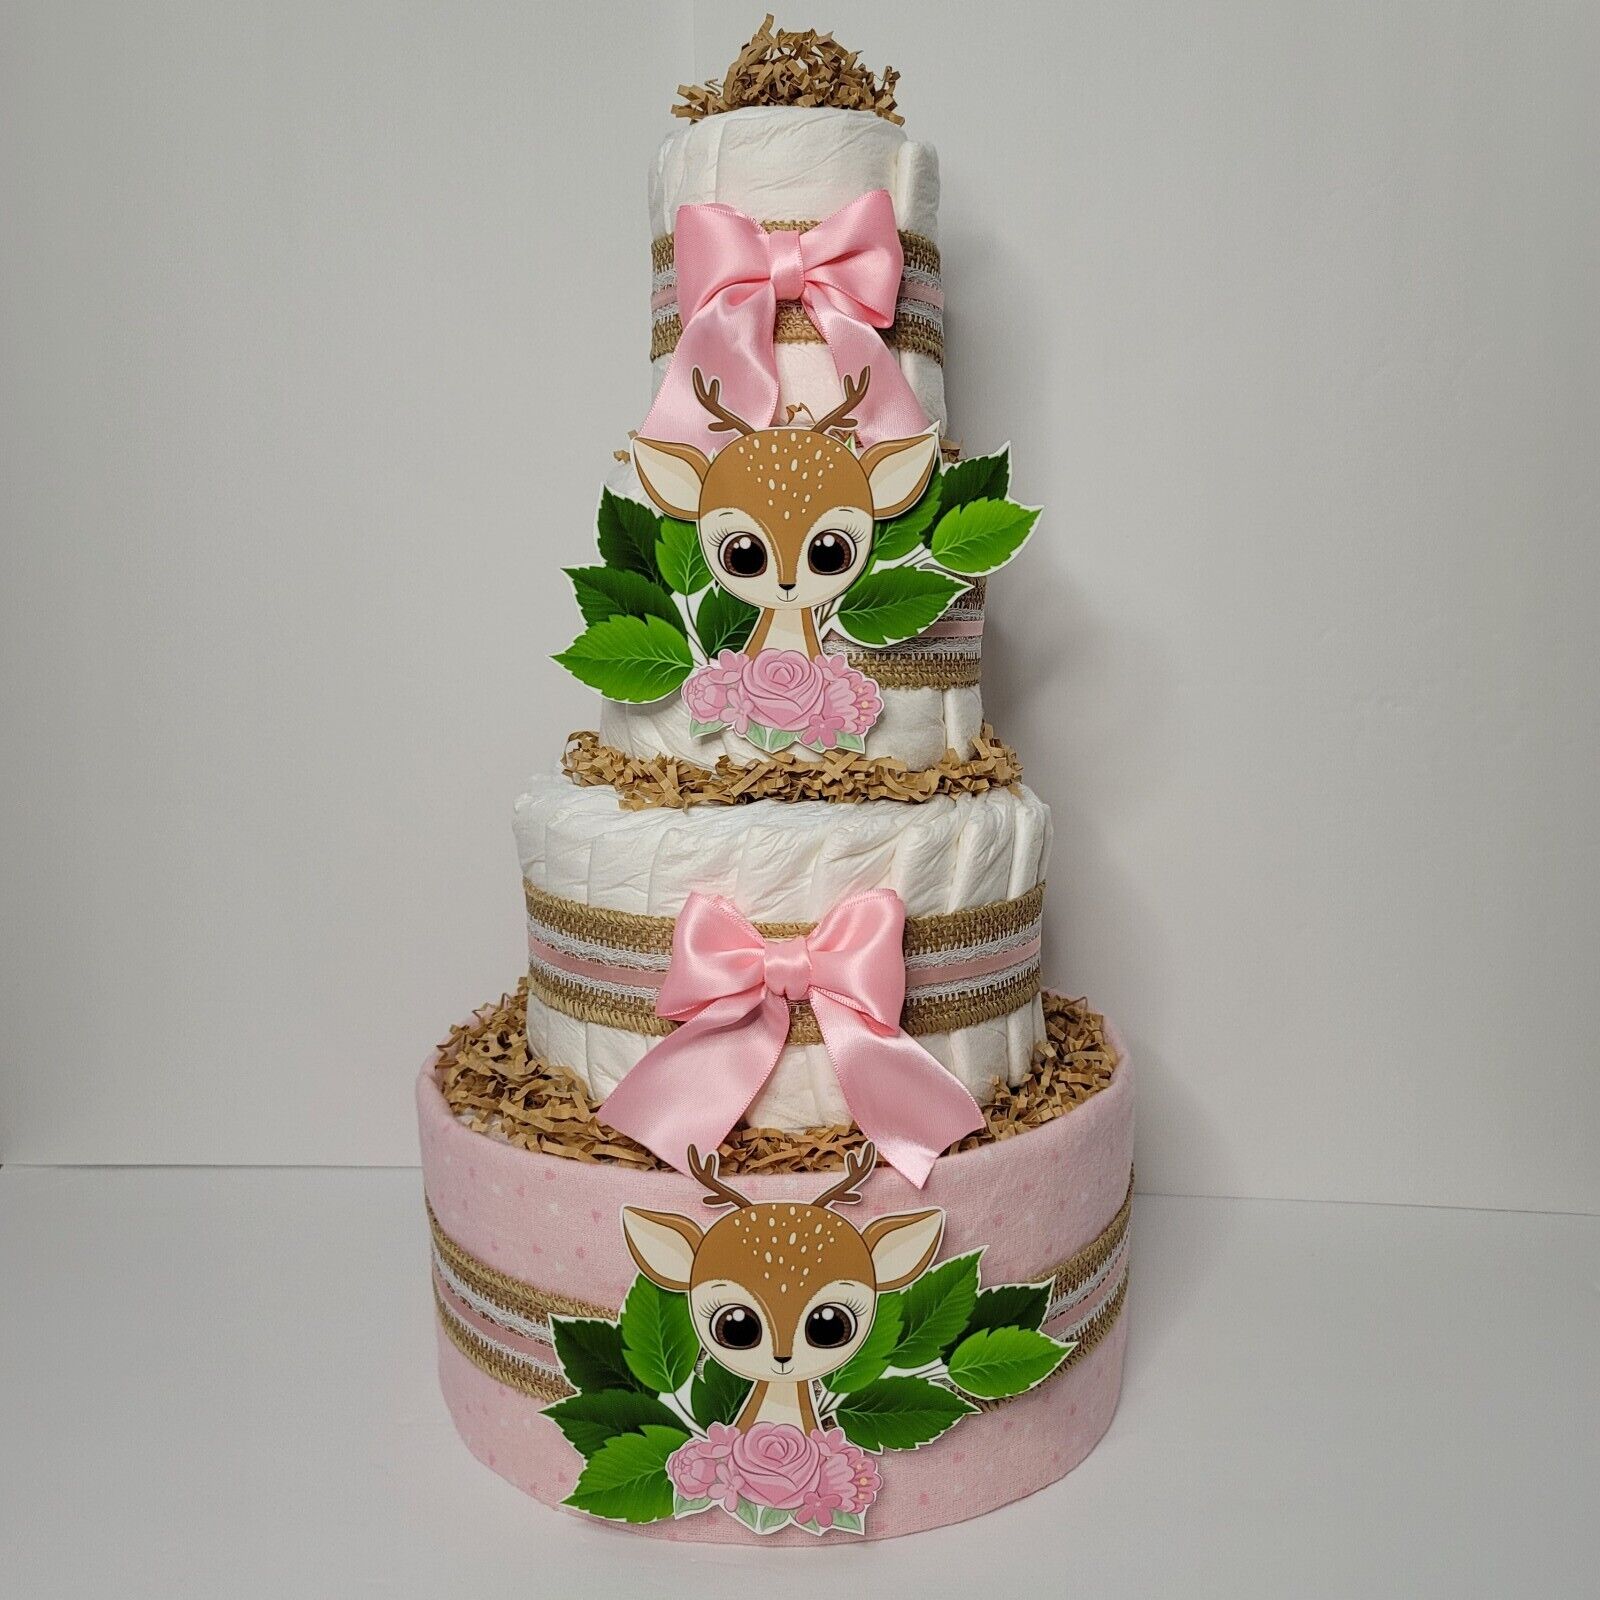 Deer Diaper Cake - Burlap And Pink Cake - Woodland Baby Shower Centerpiece - New